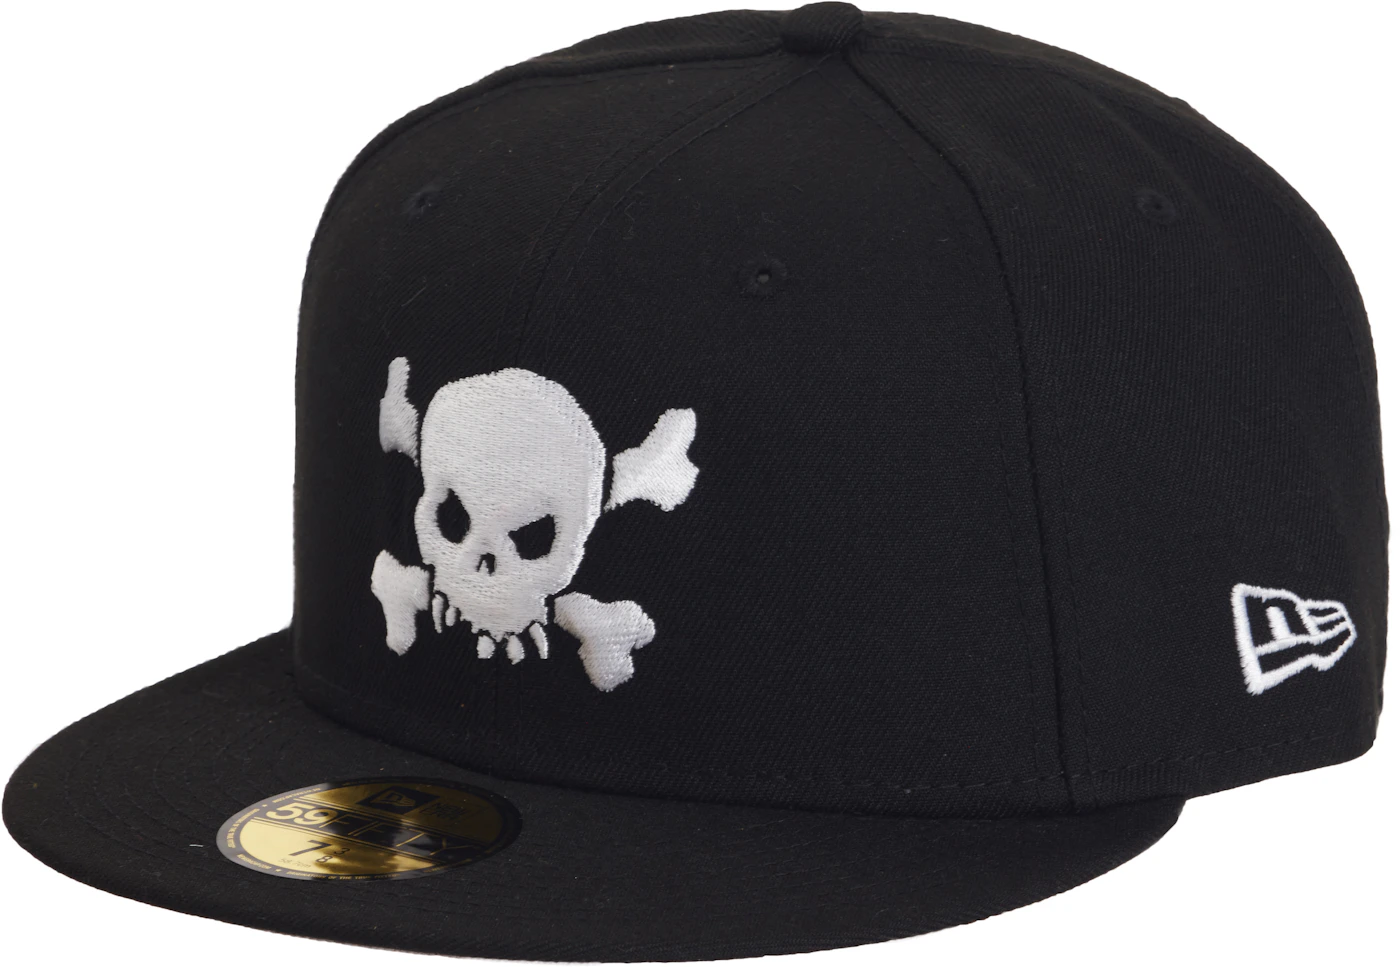 Hats - Skully Supreme – BLACK PAPER STREETWEAR